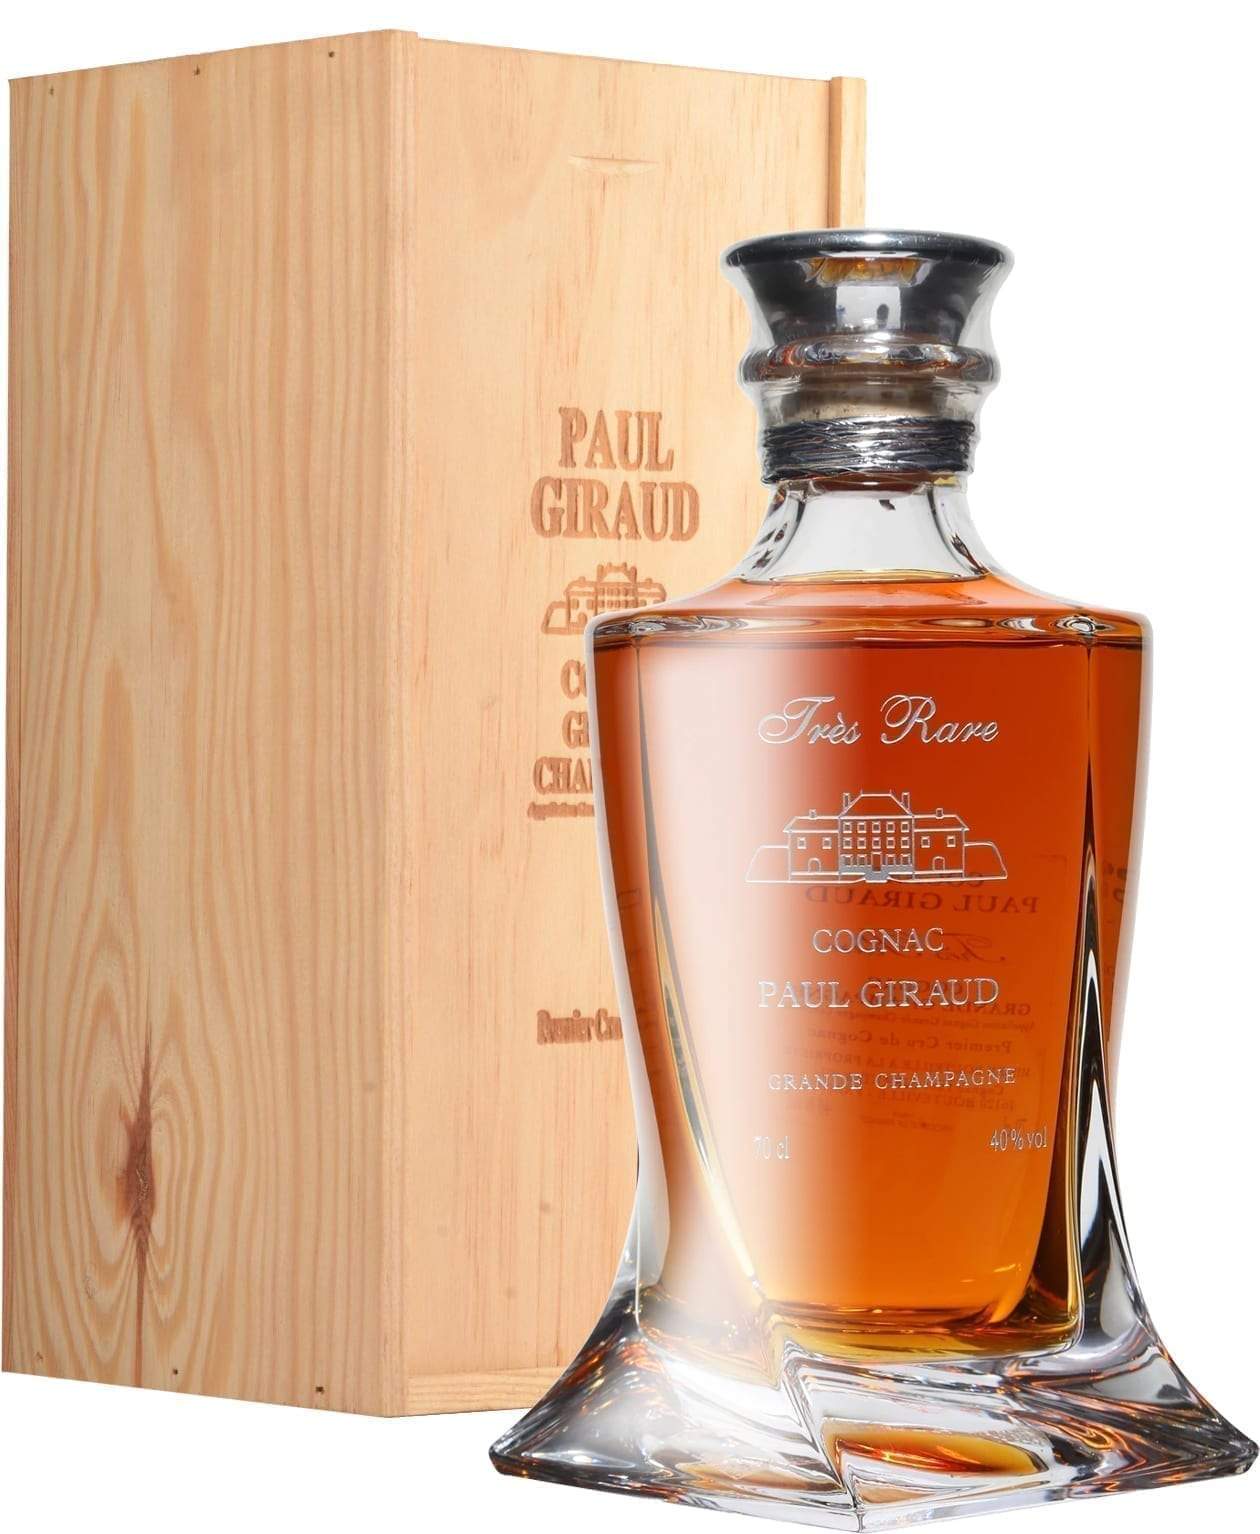 Paul Giraud Cognac Tres Rare 58 years 'Quadro Carafe' Grande Champagne 40% 700ml | Brandy | Shop online at Spirits of France